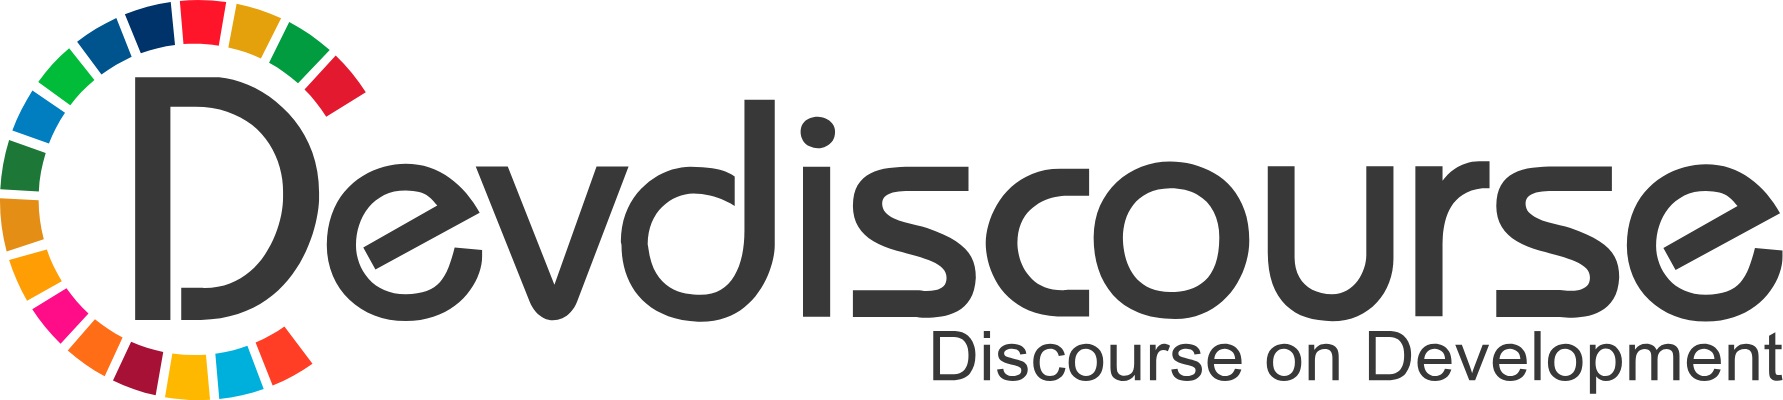 devdiscourse_logo.jpg